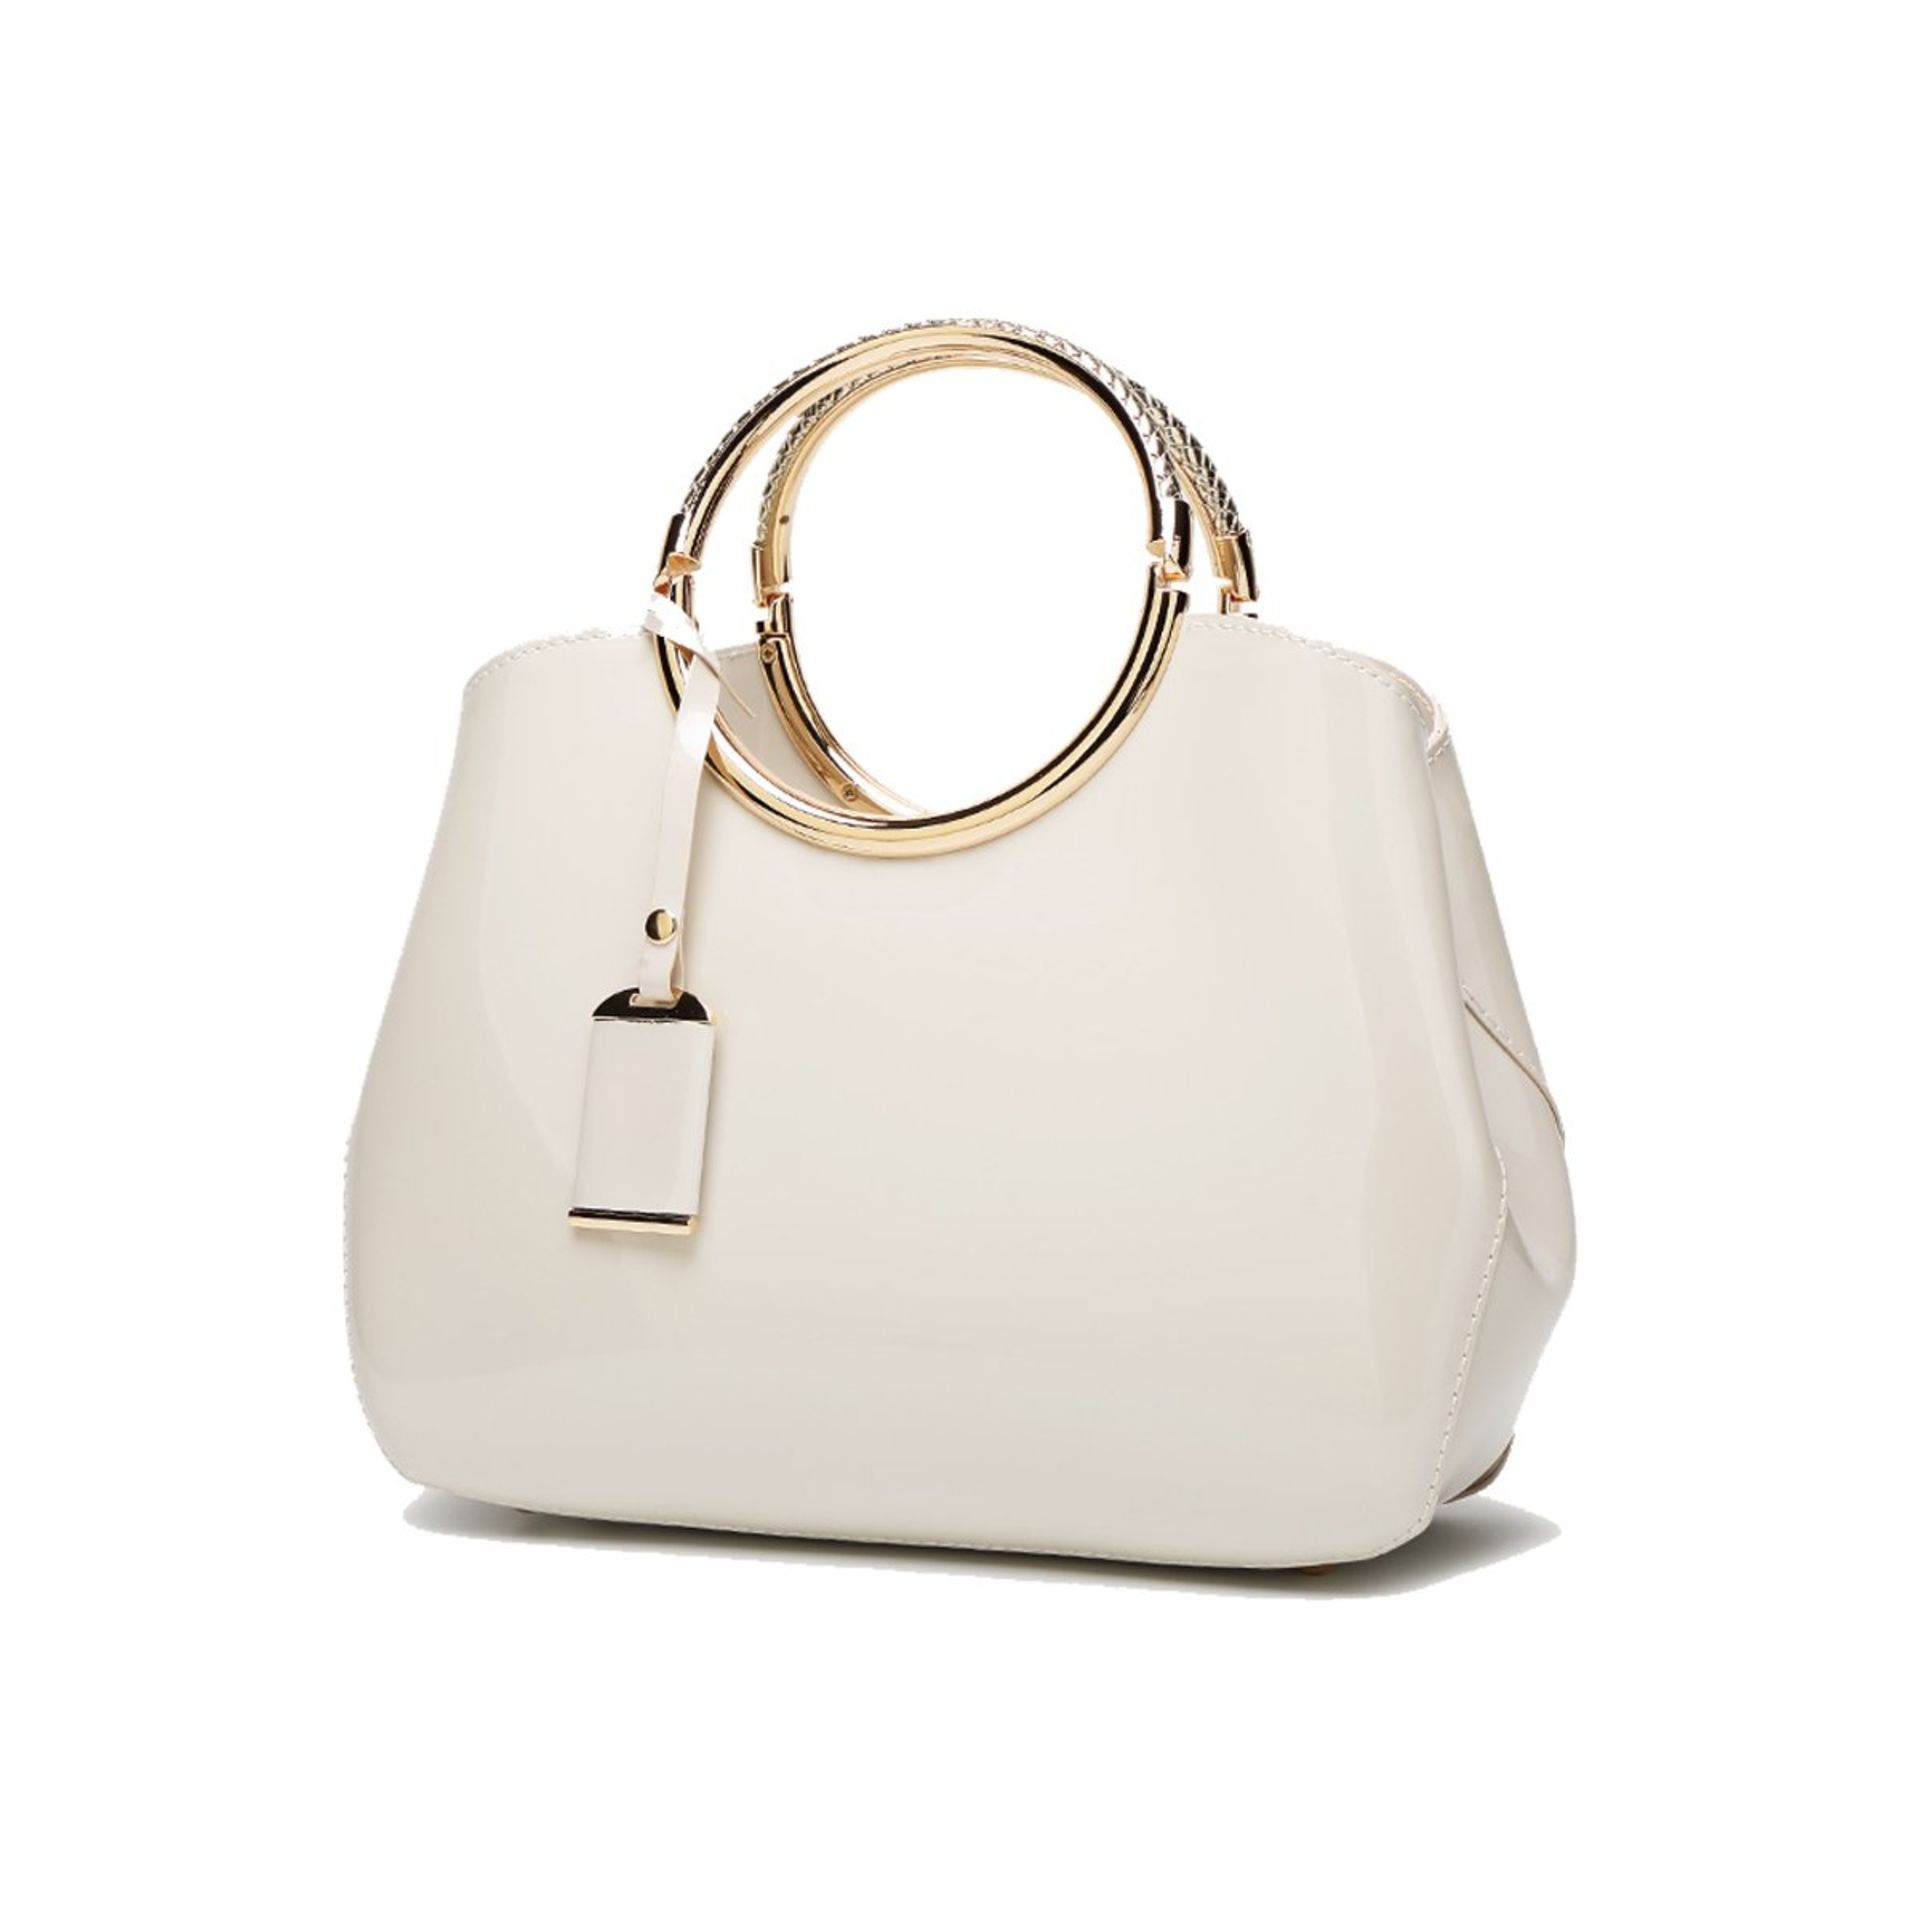 Brand New Women's Coolives Golden Strap Handbag in Creamy White RRP £44.99